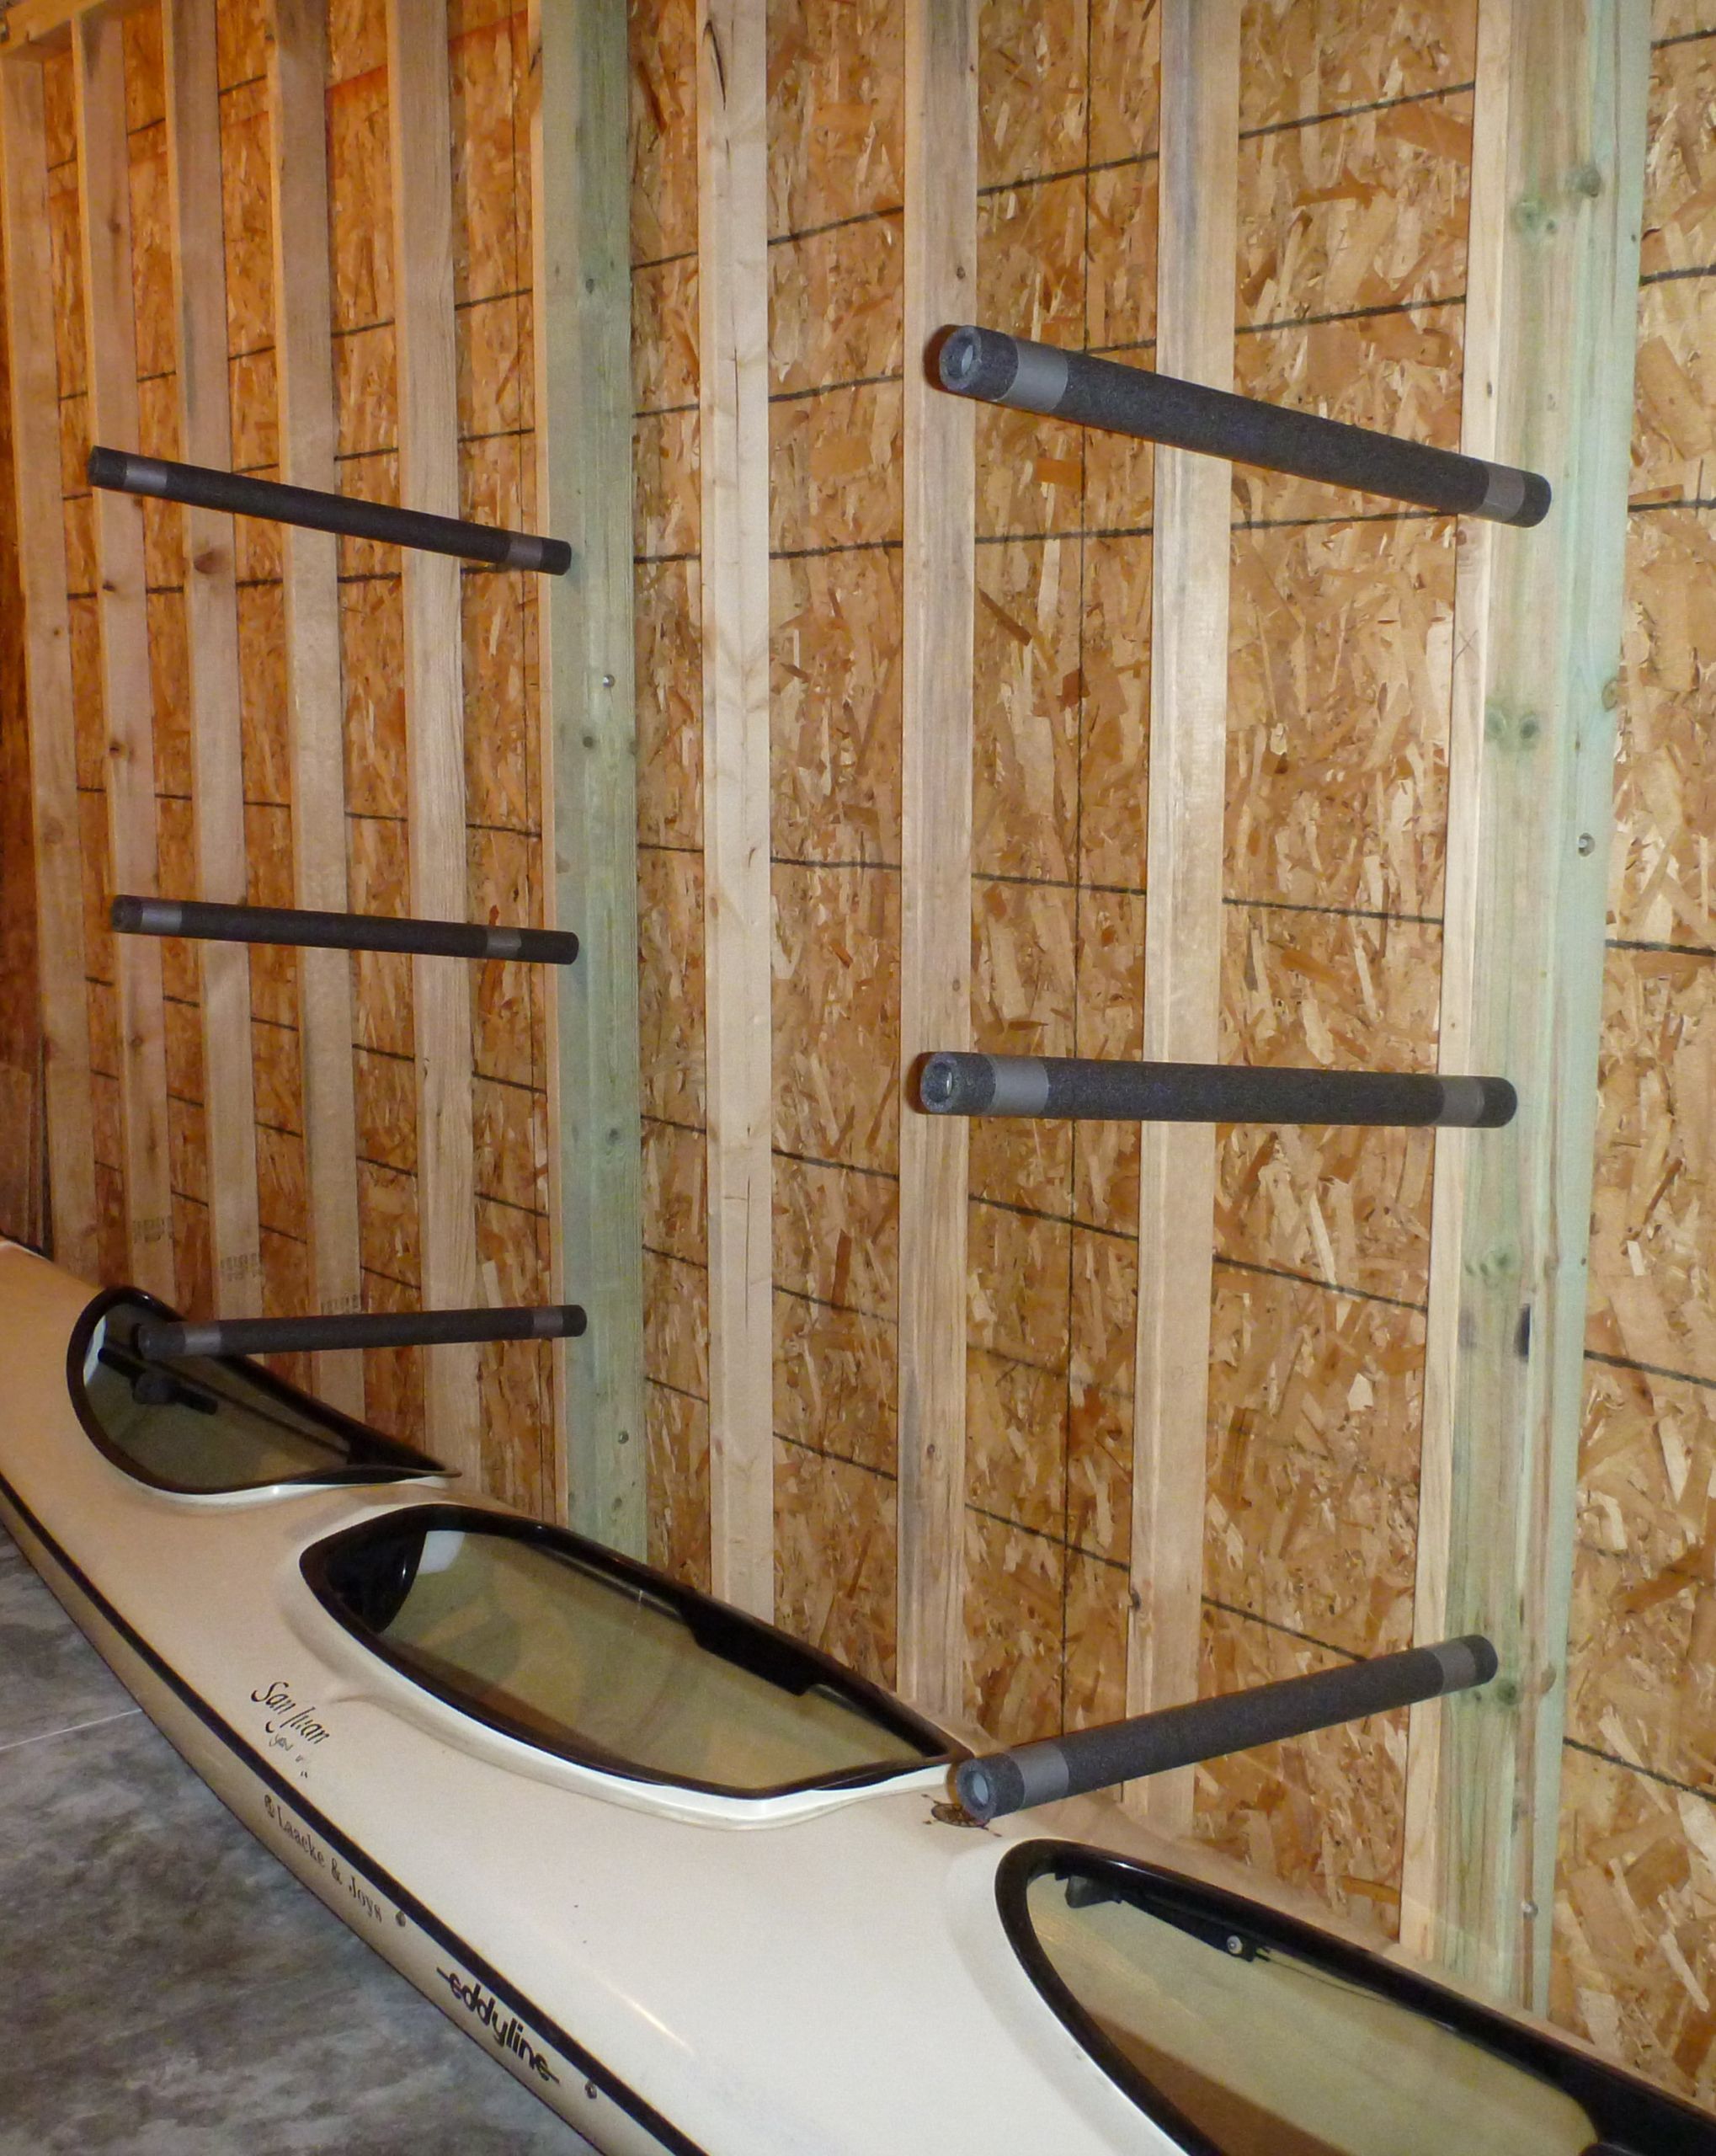 DIY Kayak Storage Racks
 Building Kayak Racks